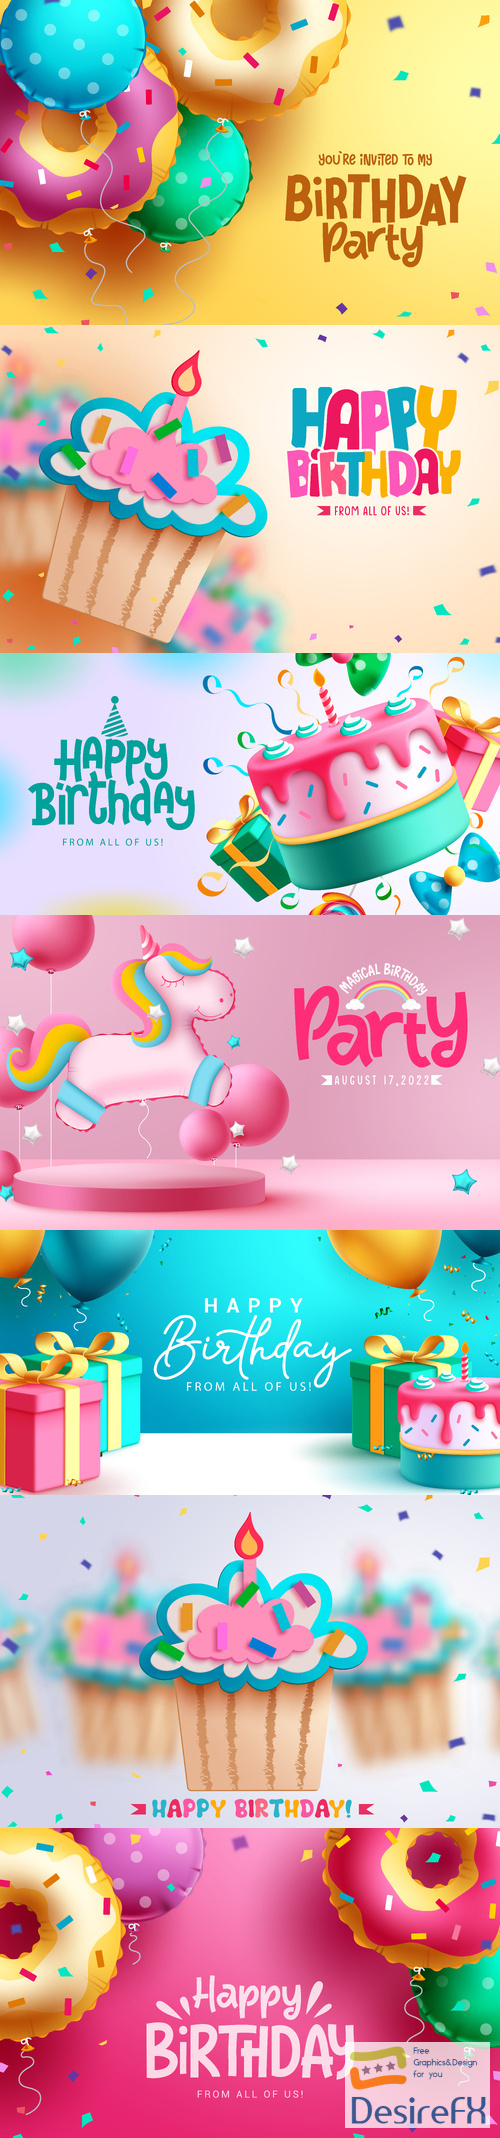 Birthday vector design, happy birthday cut cupcake elements